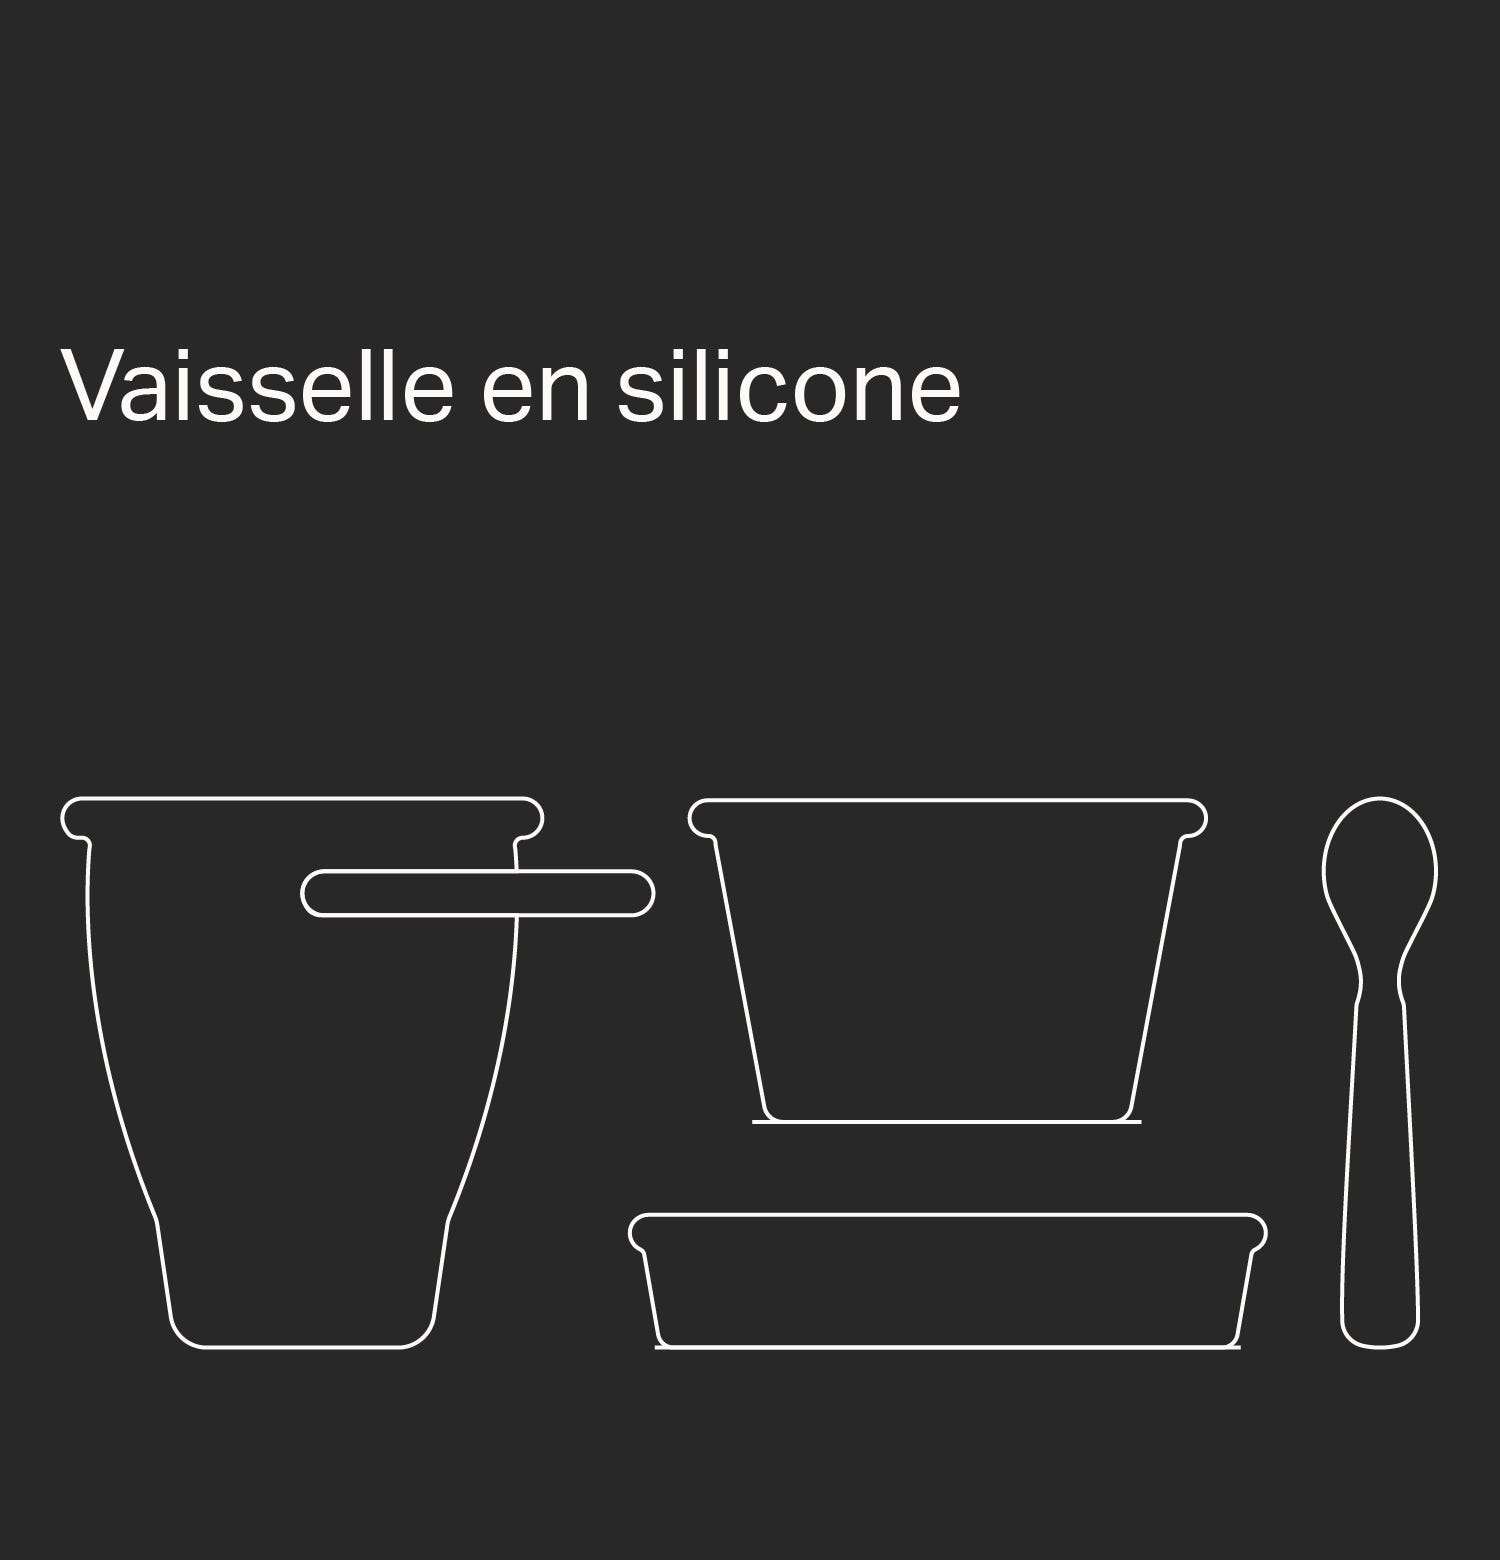 Vaisselle en silicone